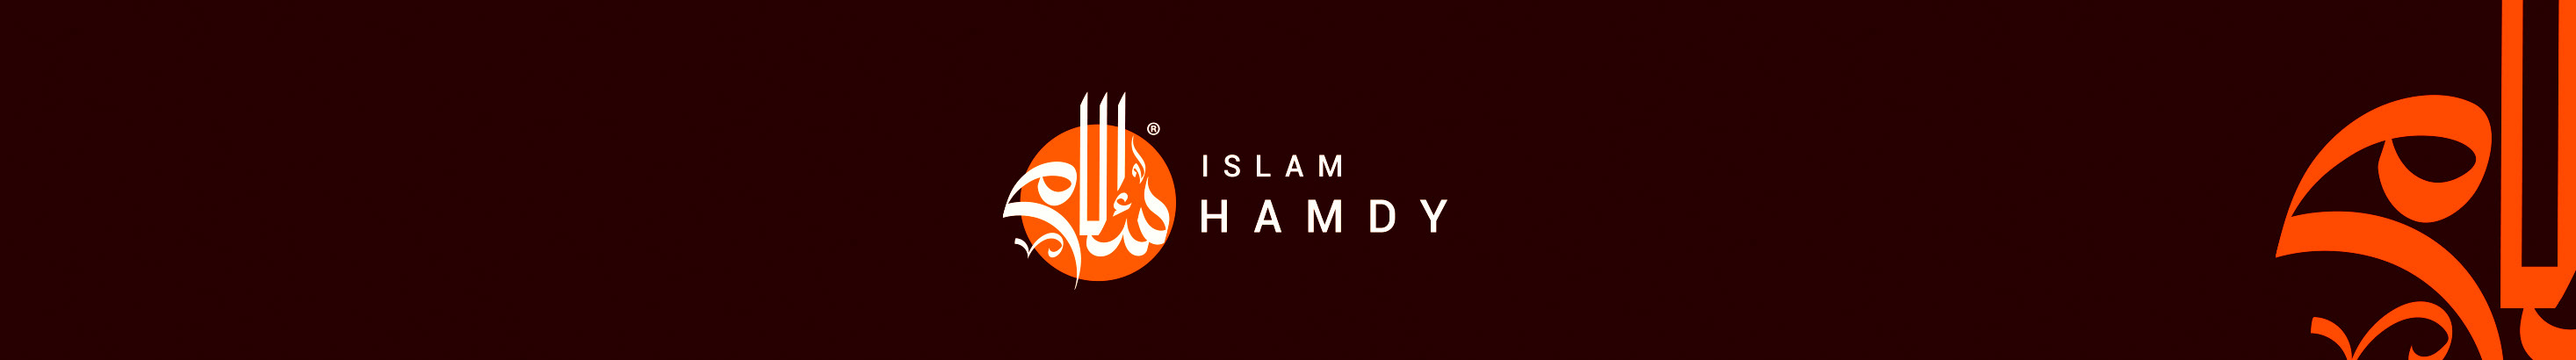 Islam Hamdys profilbanner